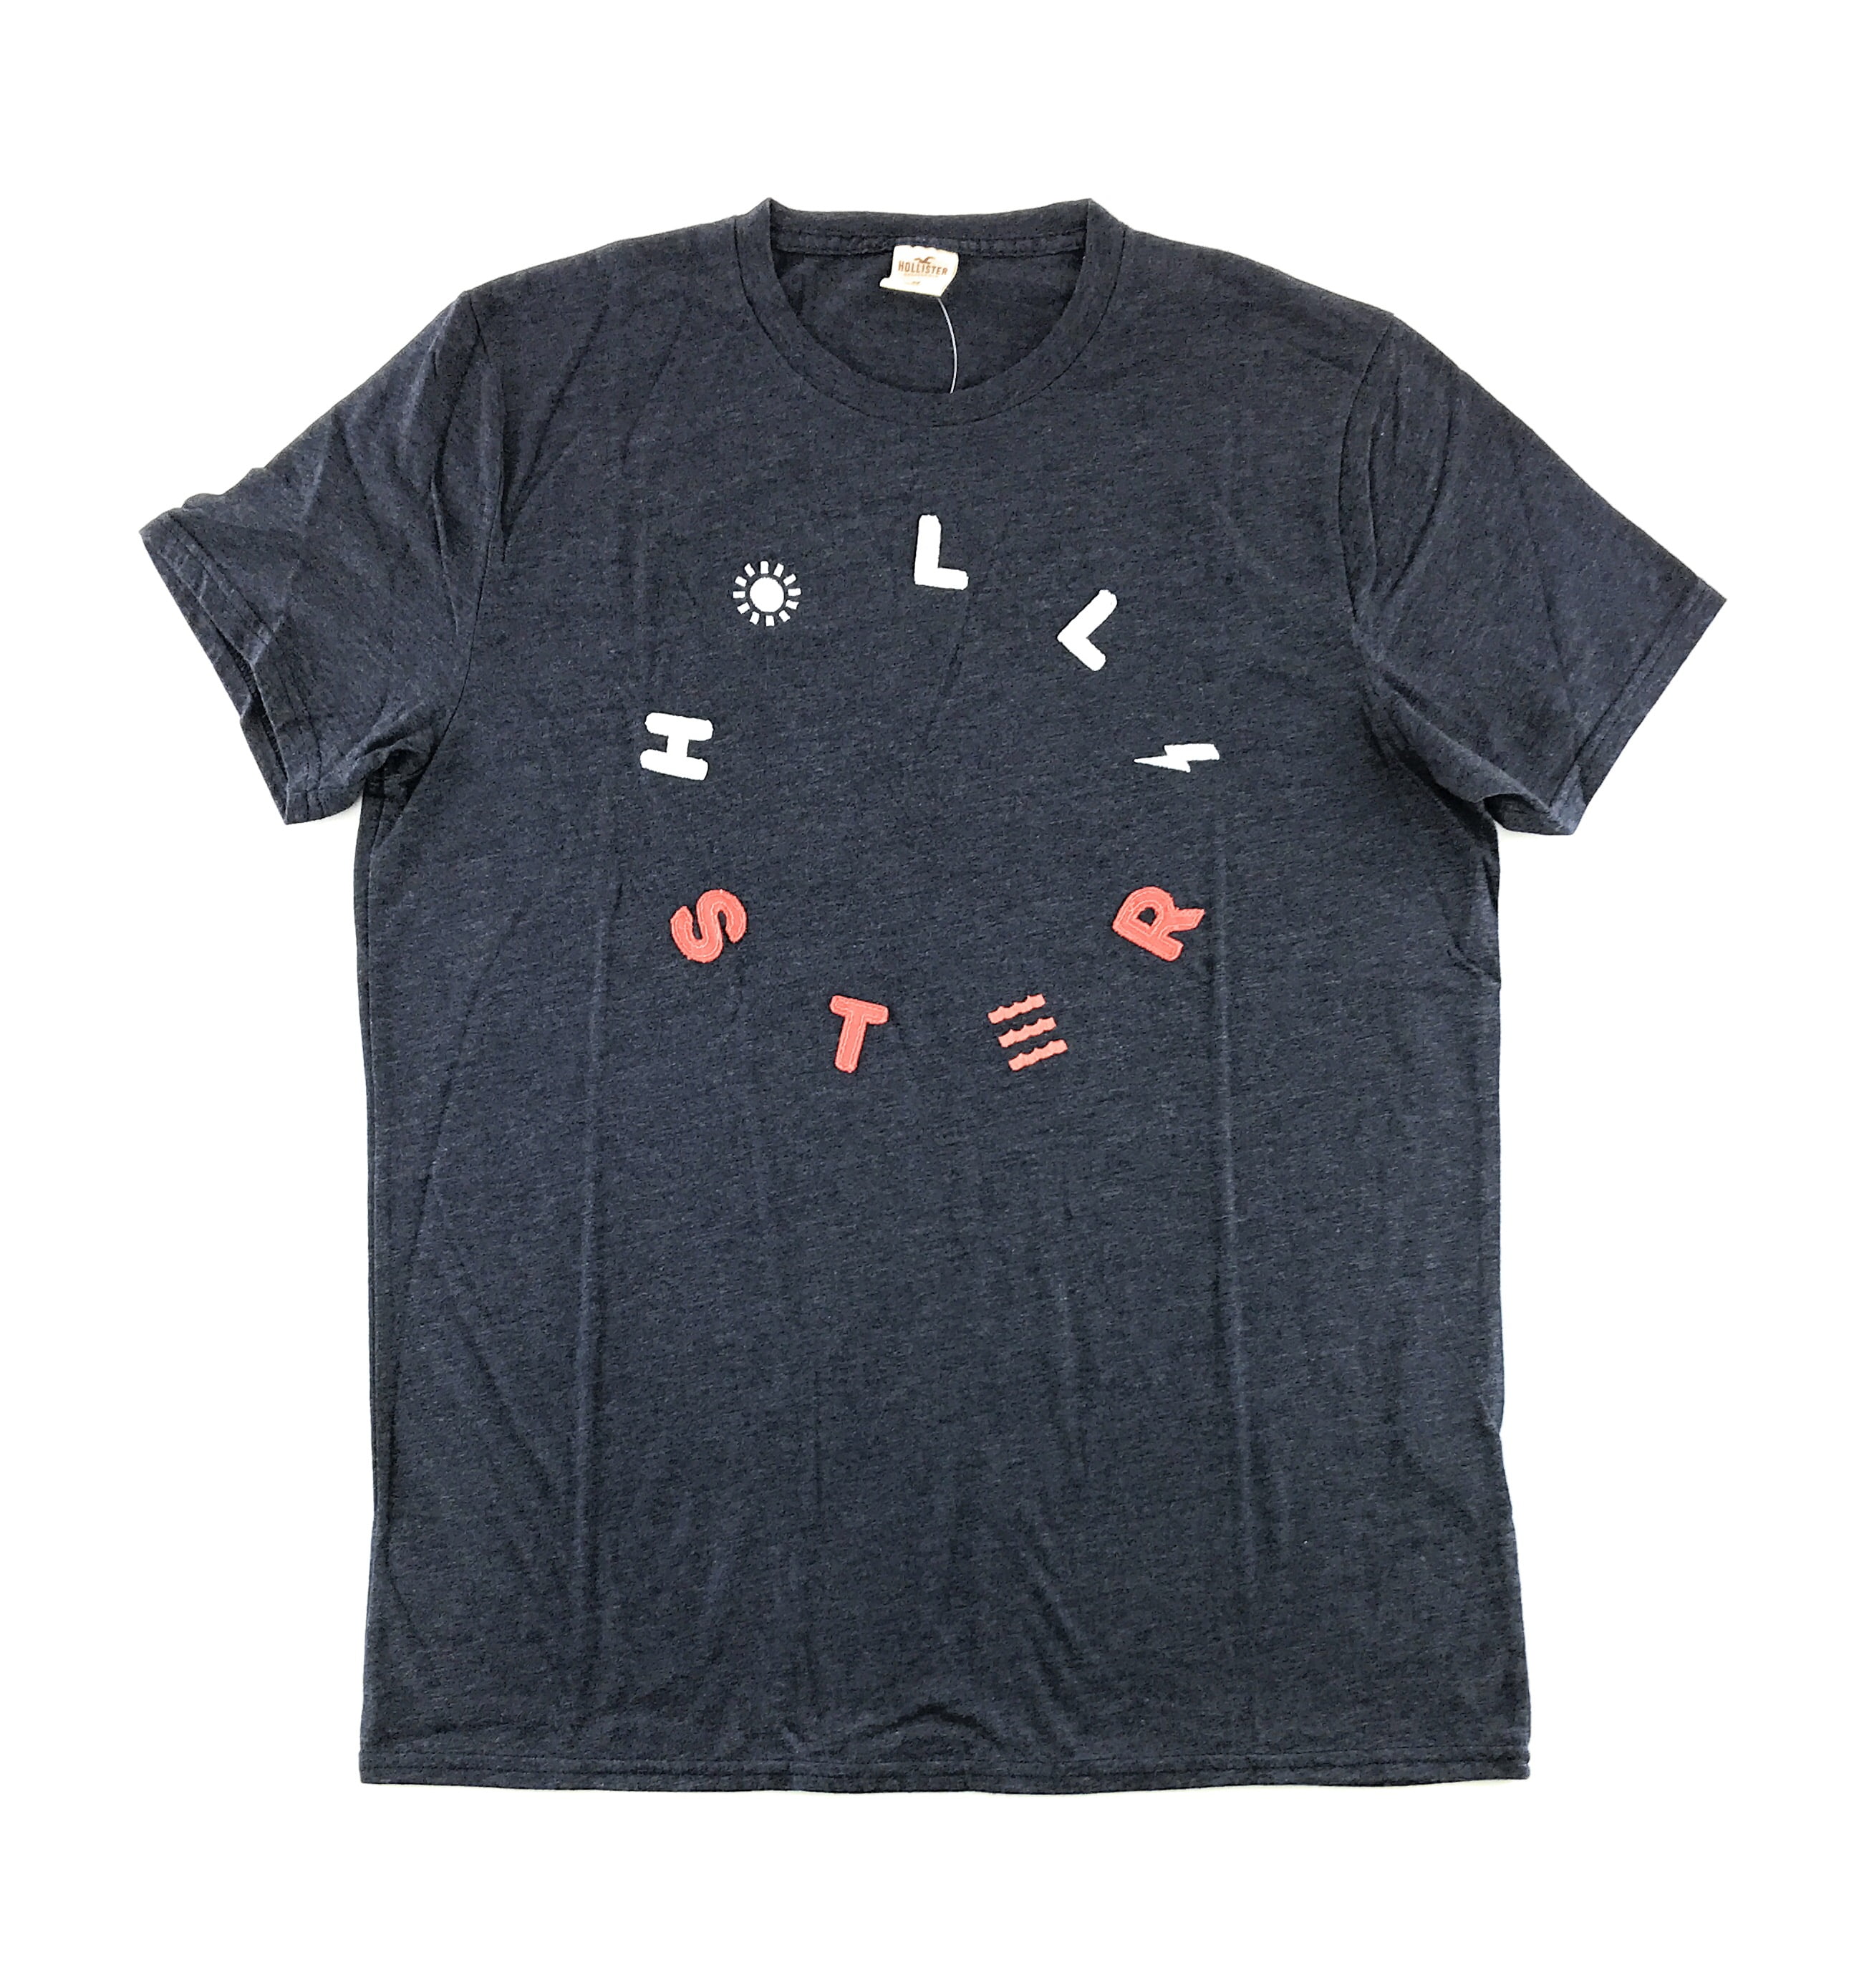 Original Hollister T-shirt - Men's Clothing - 190188817